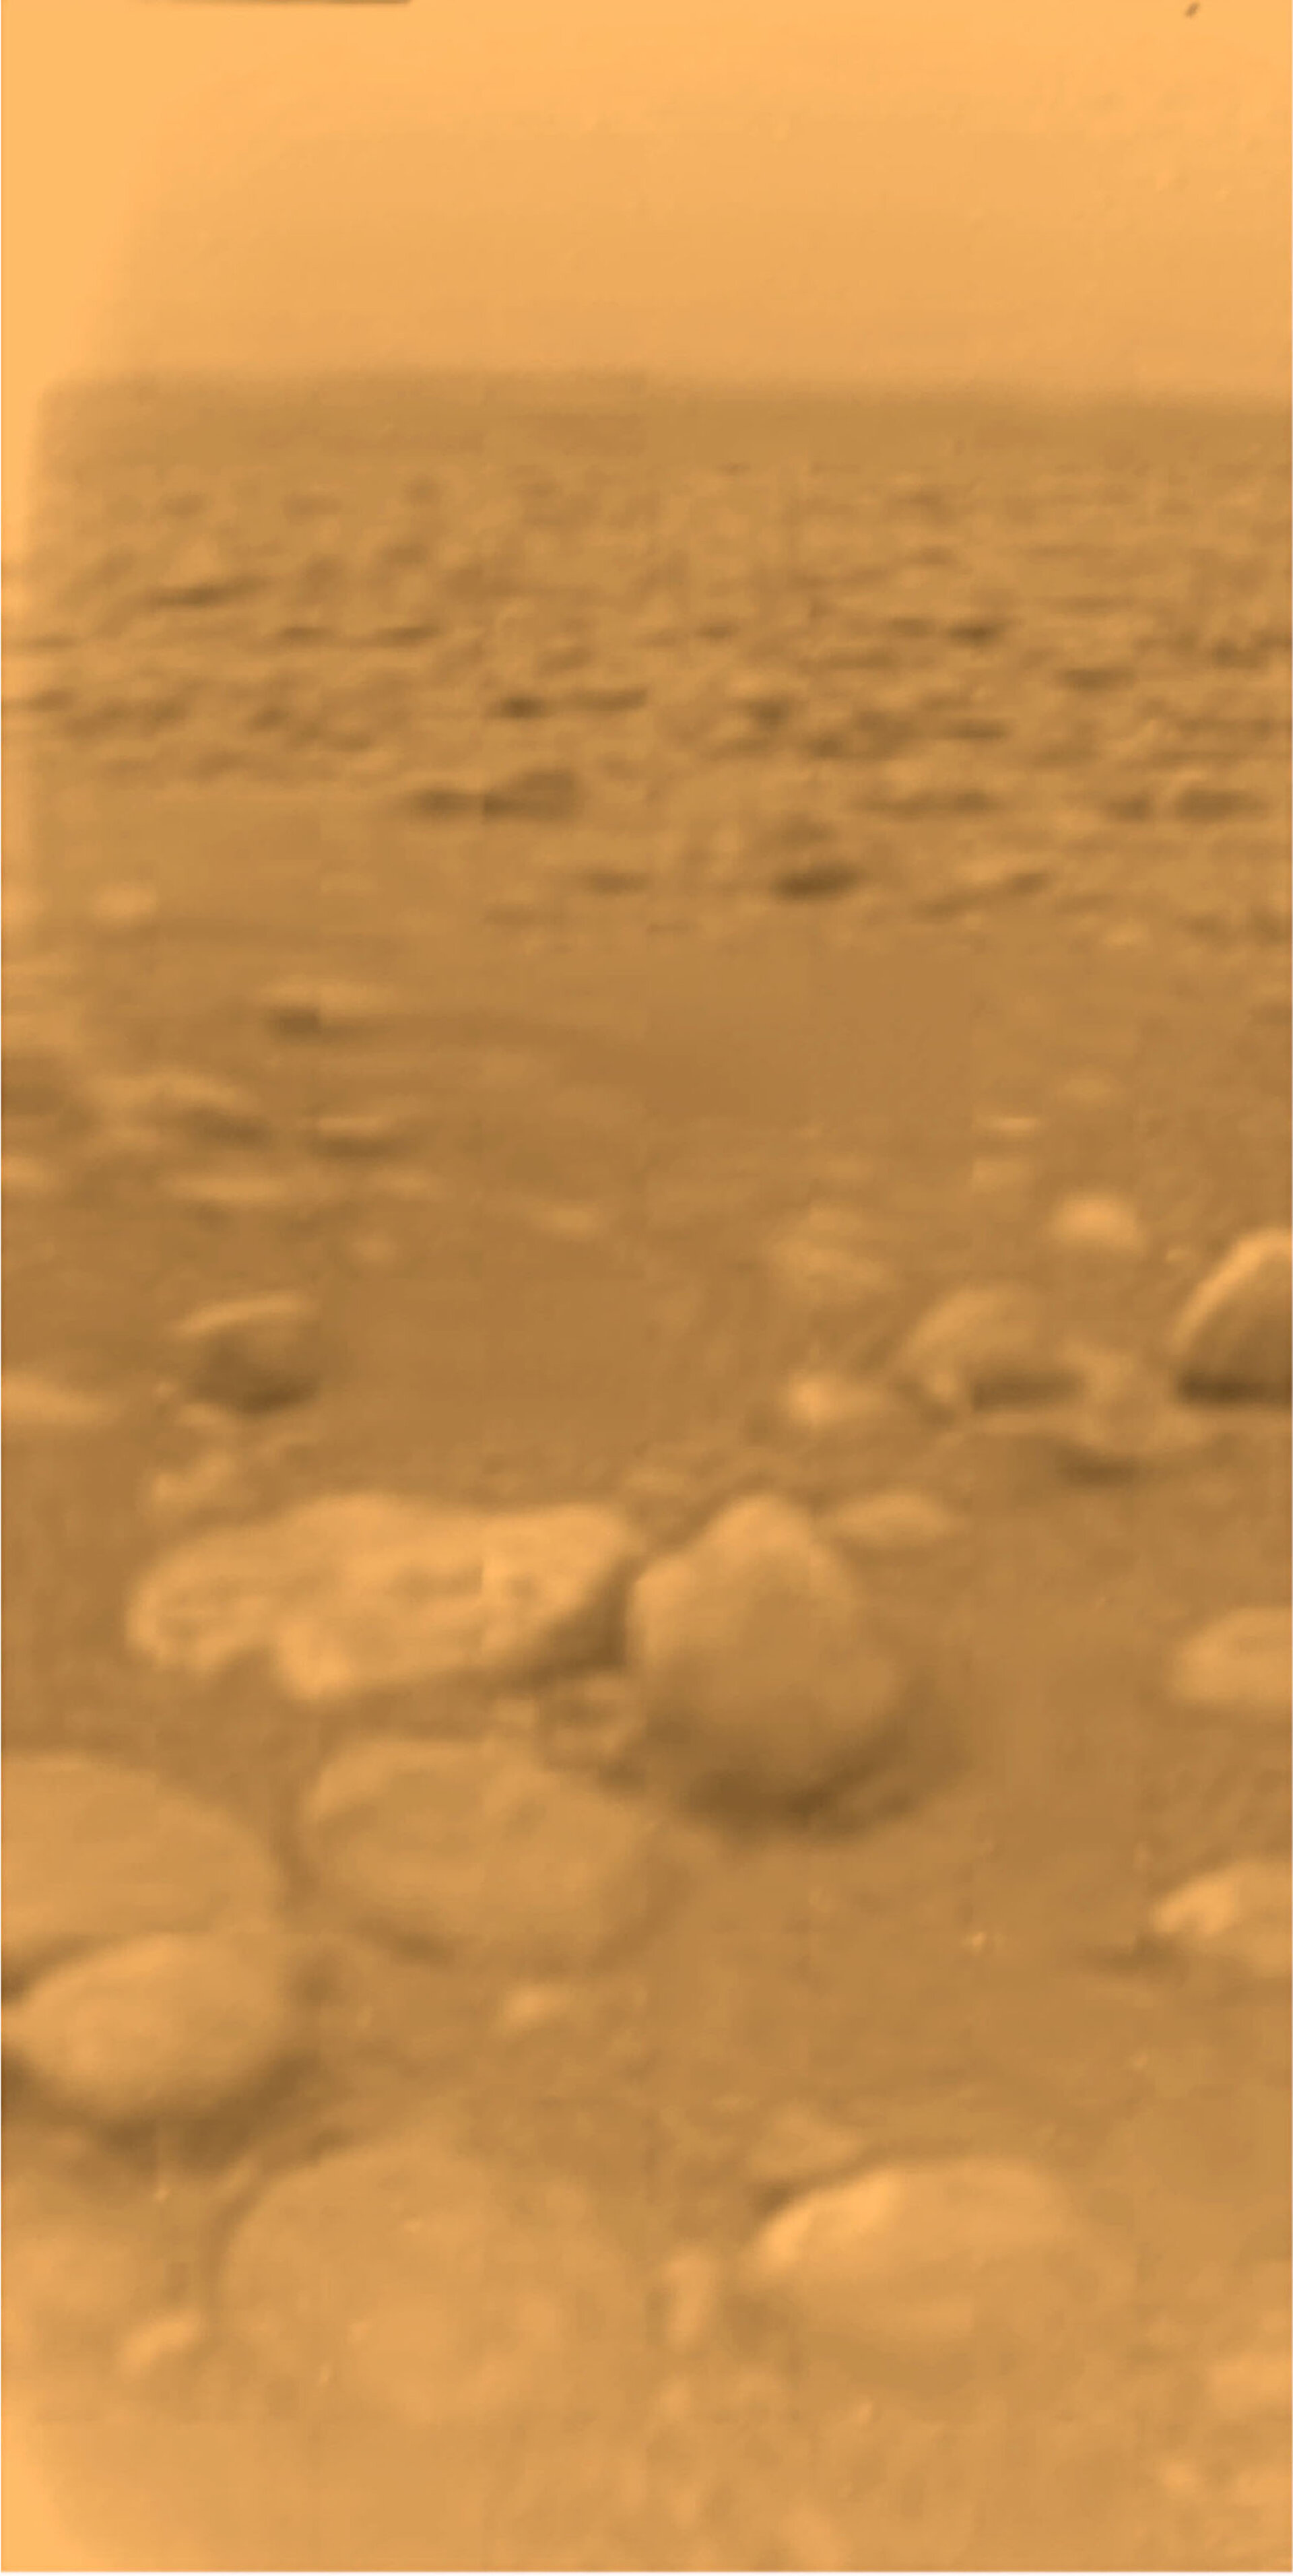 Titan's surface, Huygens